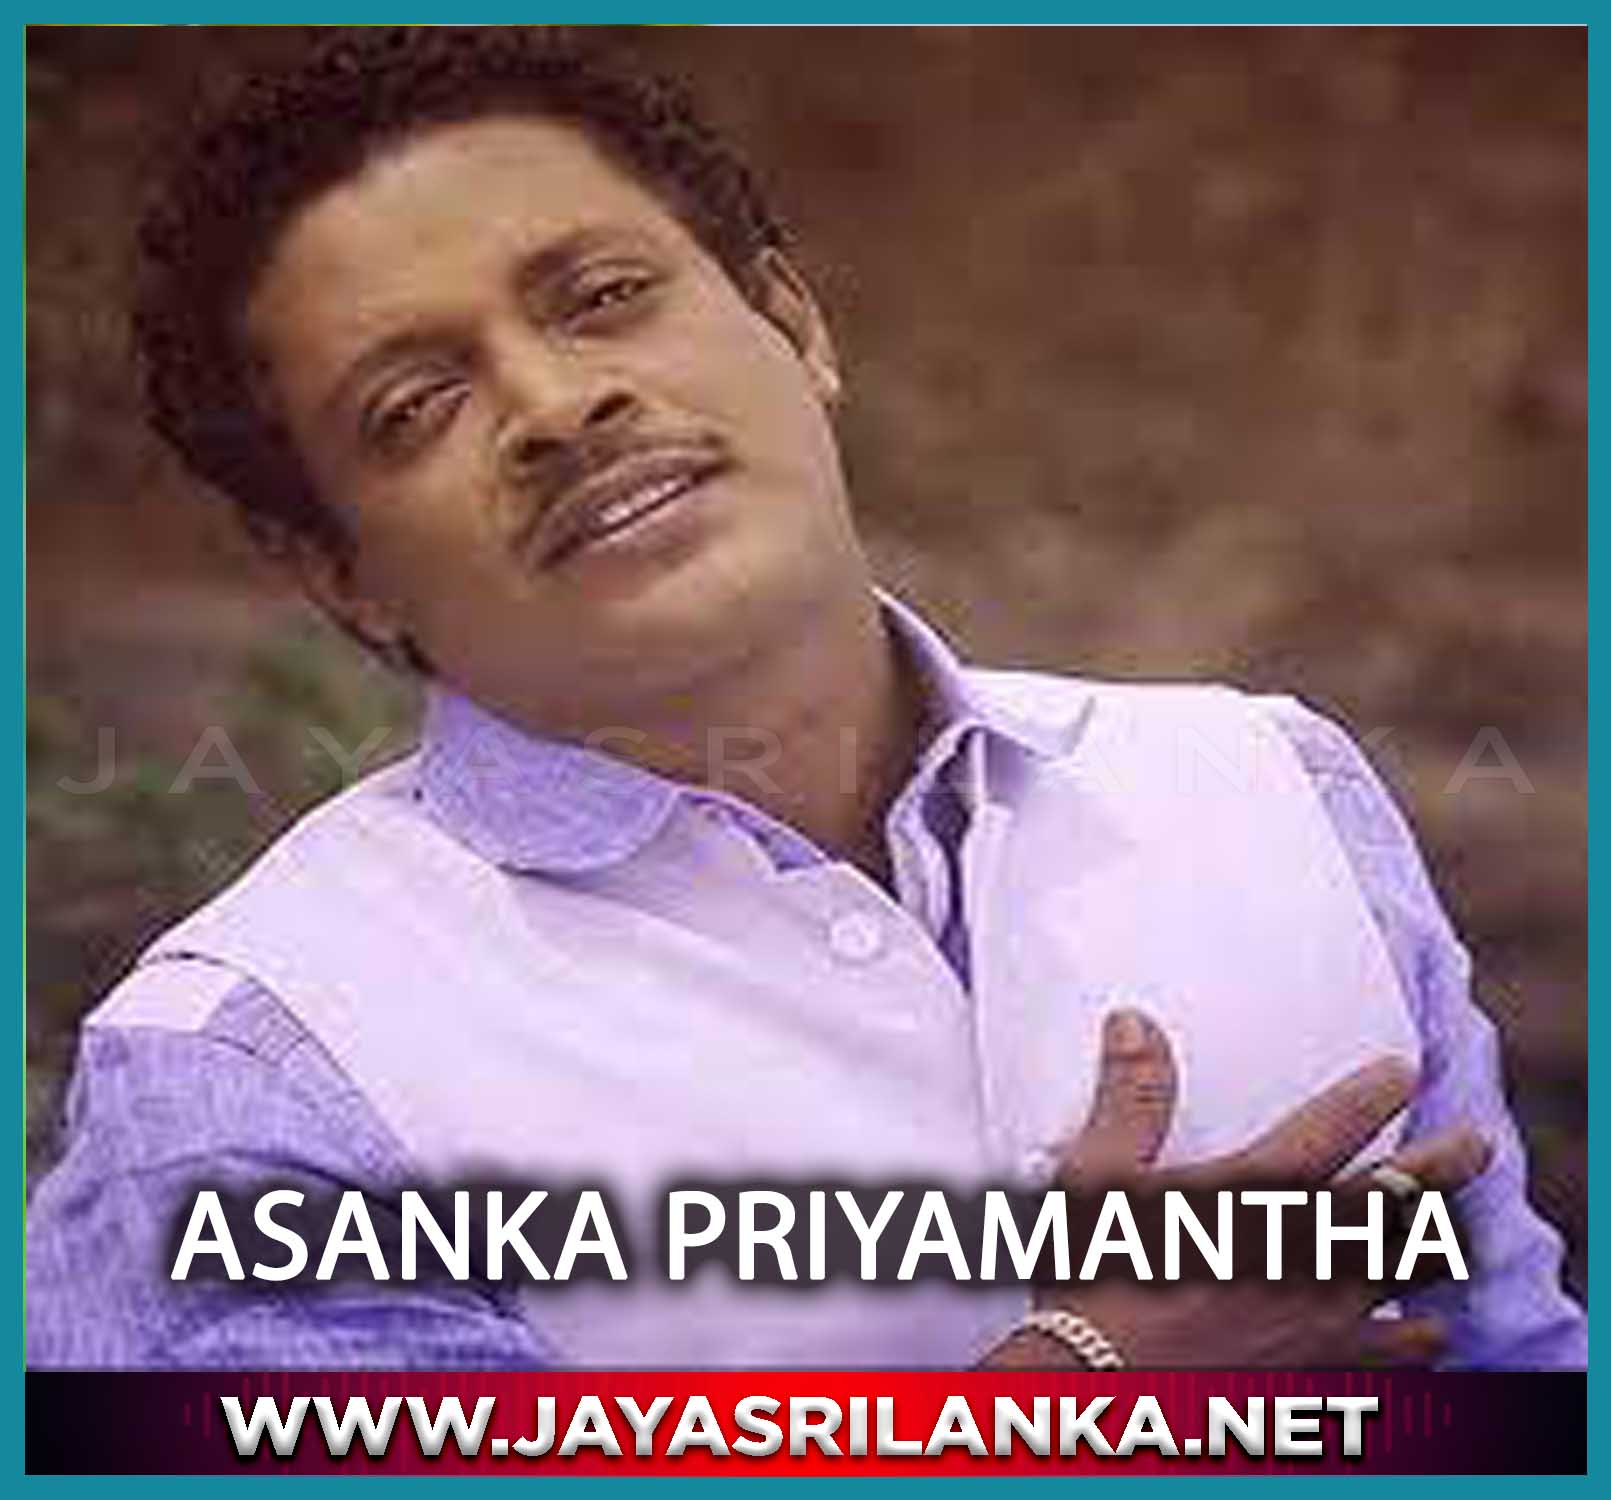 Wandanawe Amma Giya - Asanka Priyamantha Peiris mp3 Image